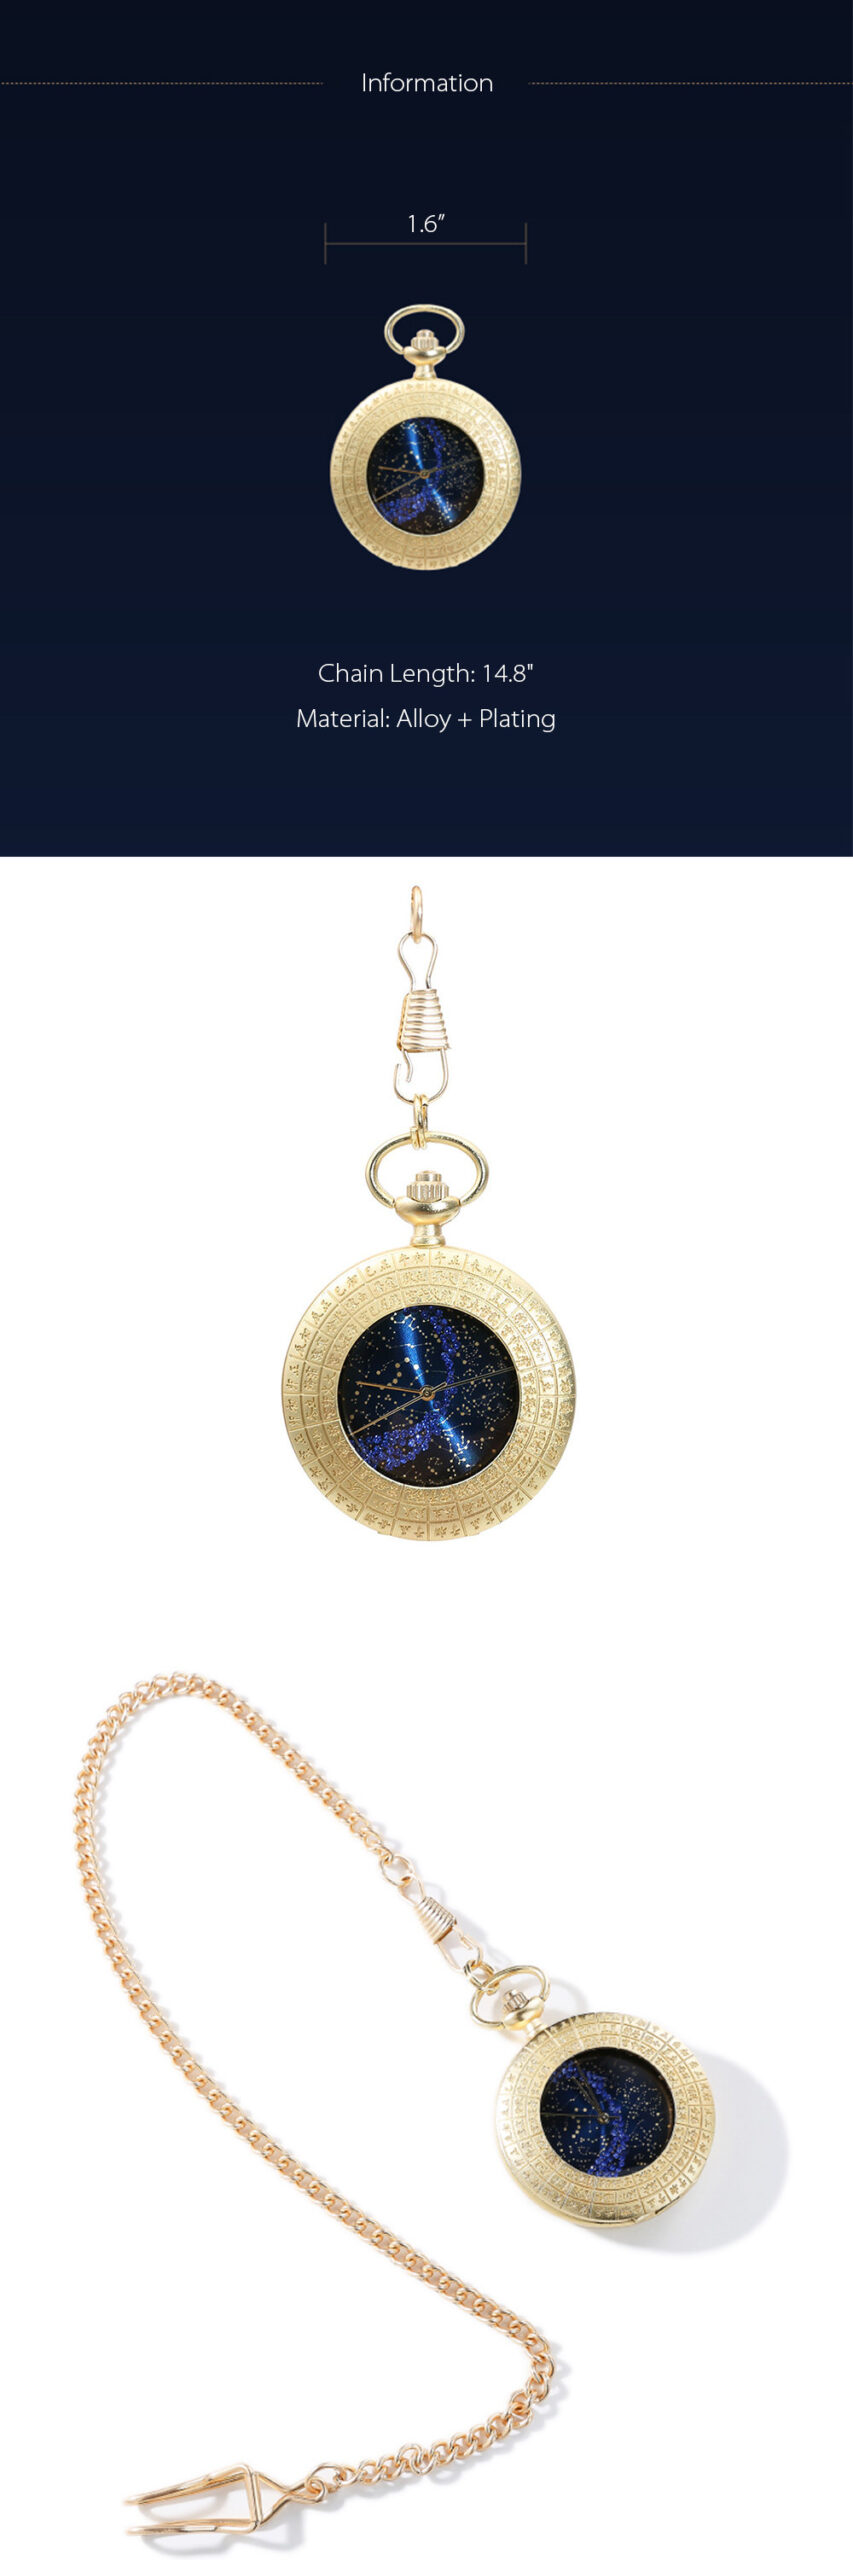 Chinese Stellar Pocket Watch · iregee | Small Gift, Great Lifestyle.